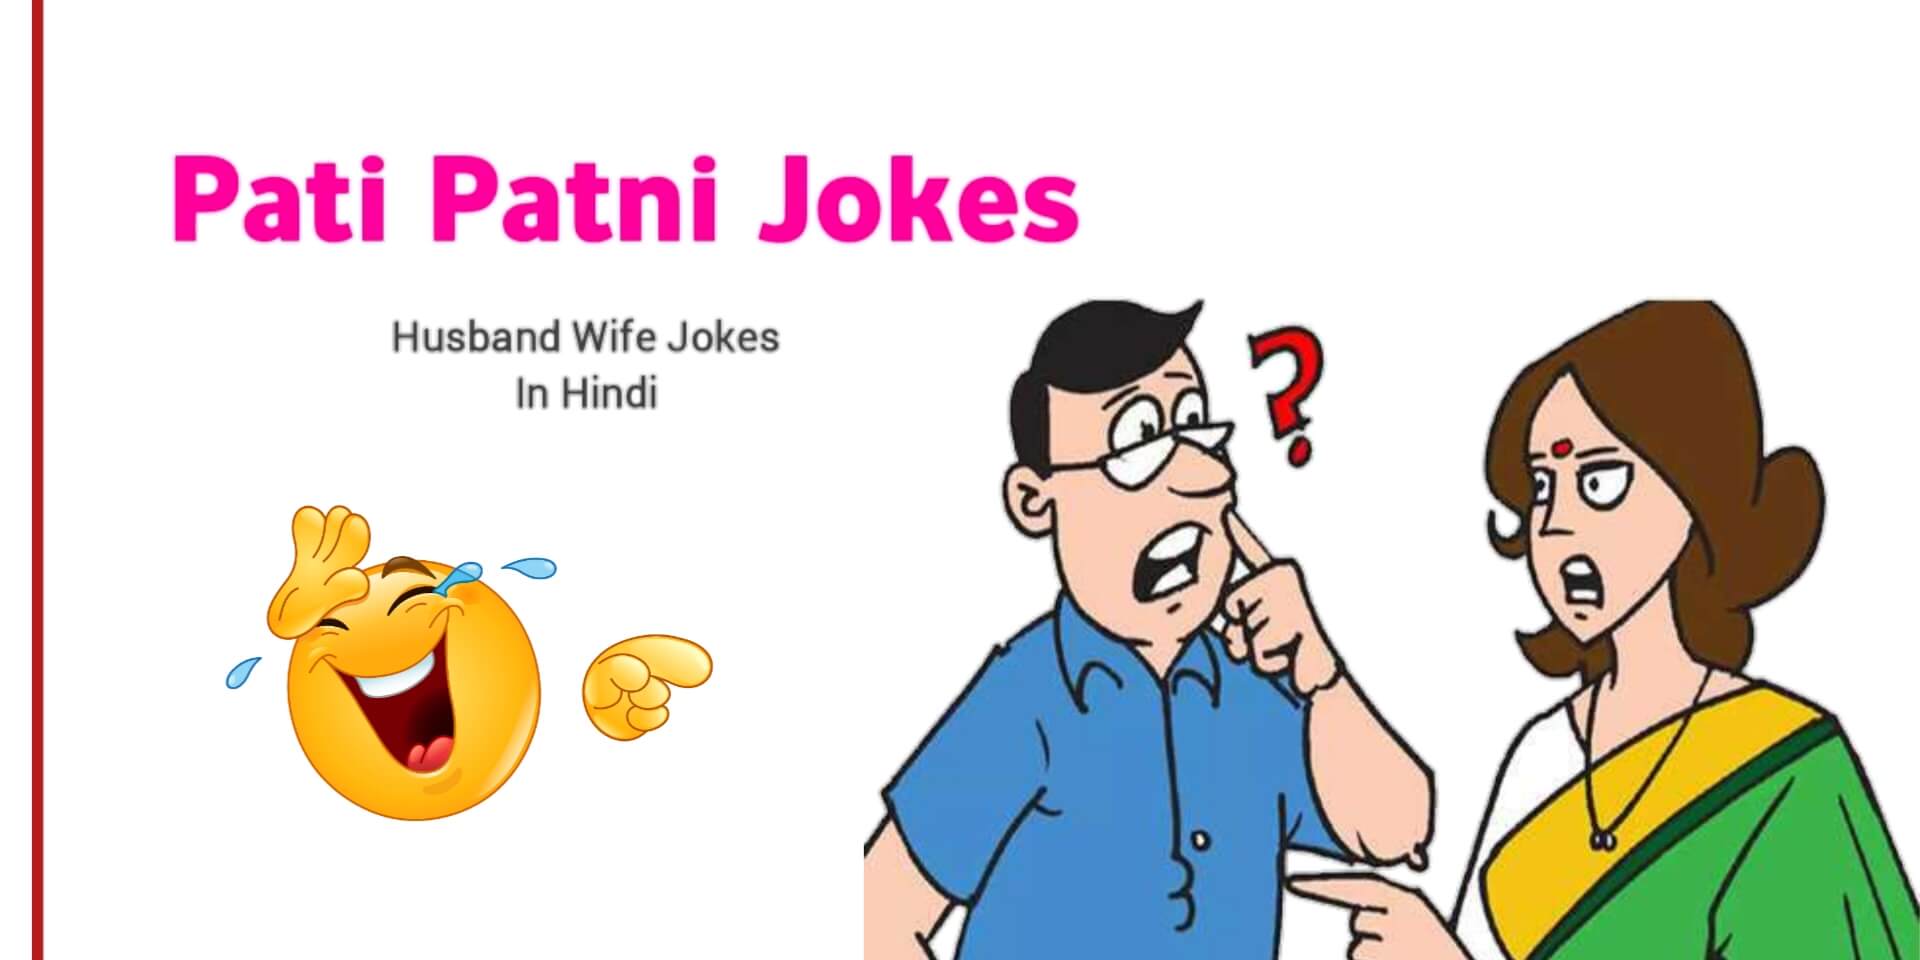 Pati Patni Jokes in Hindi [ 100+ मज़ेदार पति पत्नी चुटकुले हिंदी लेटेस्ट ]